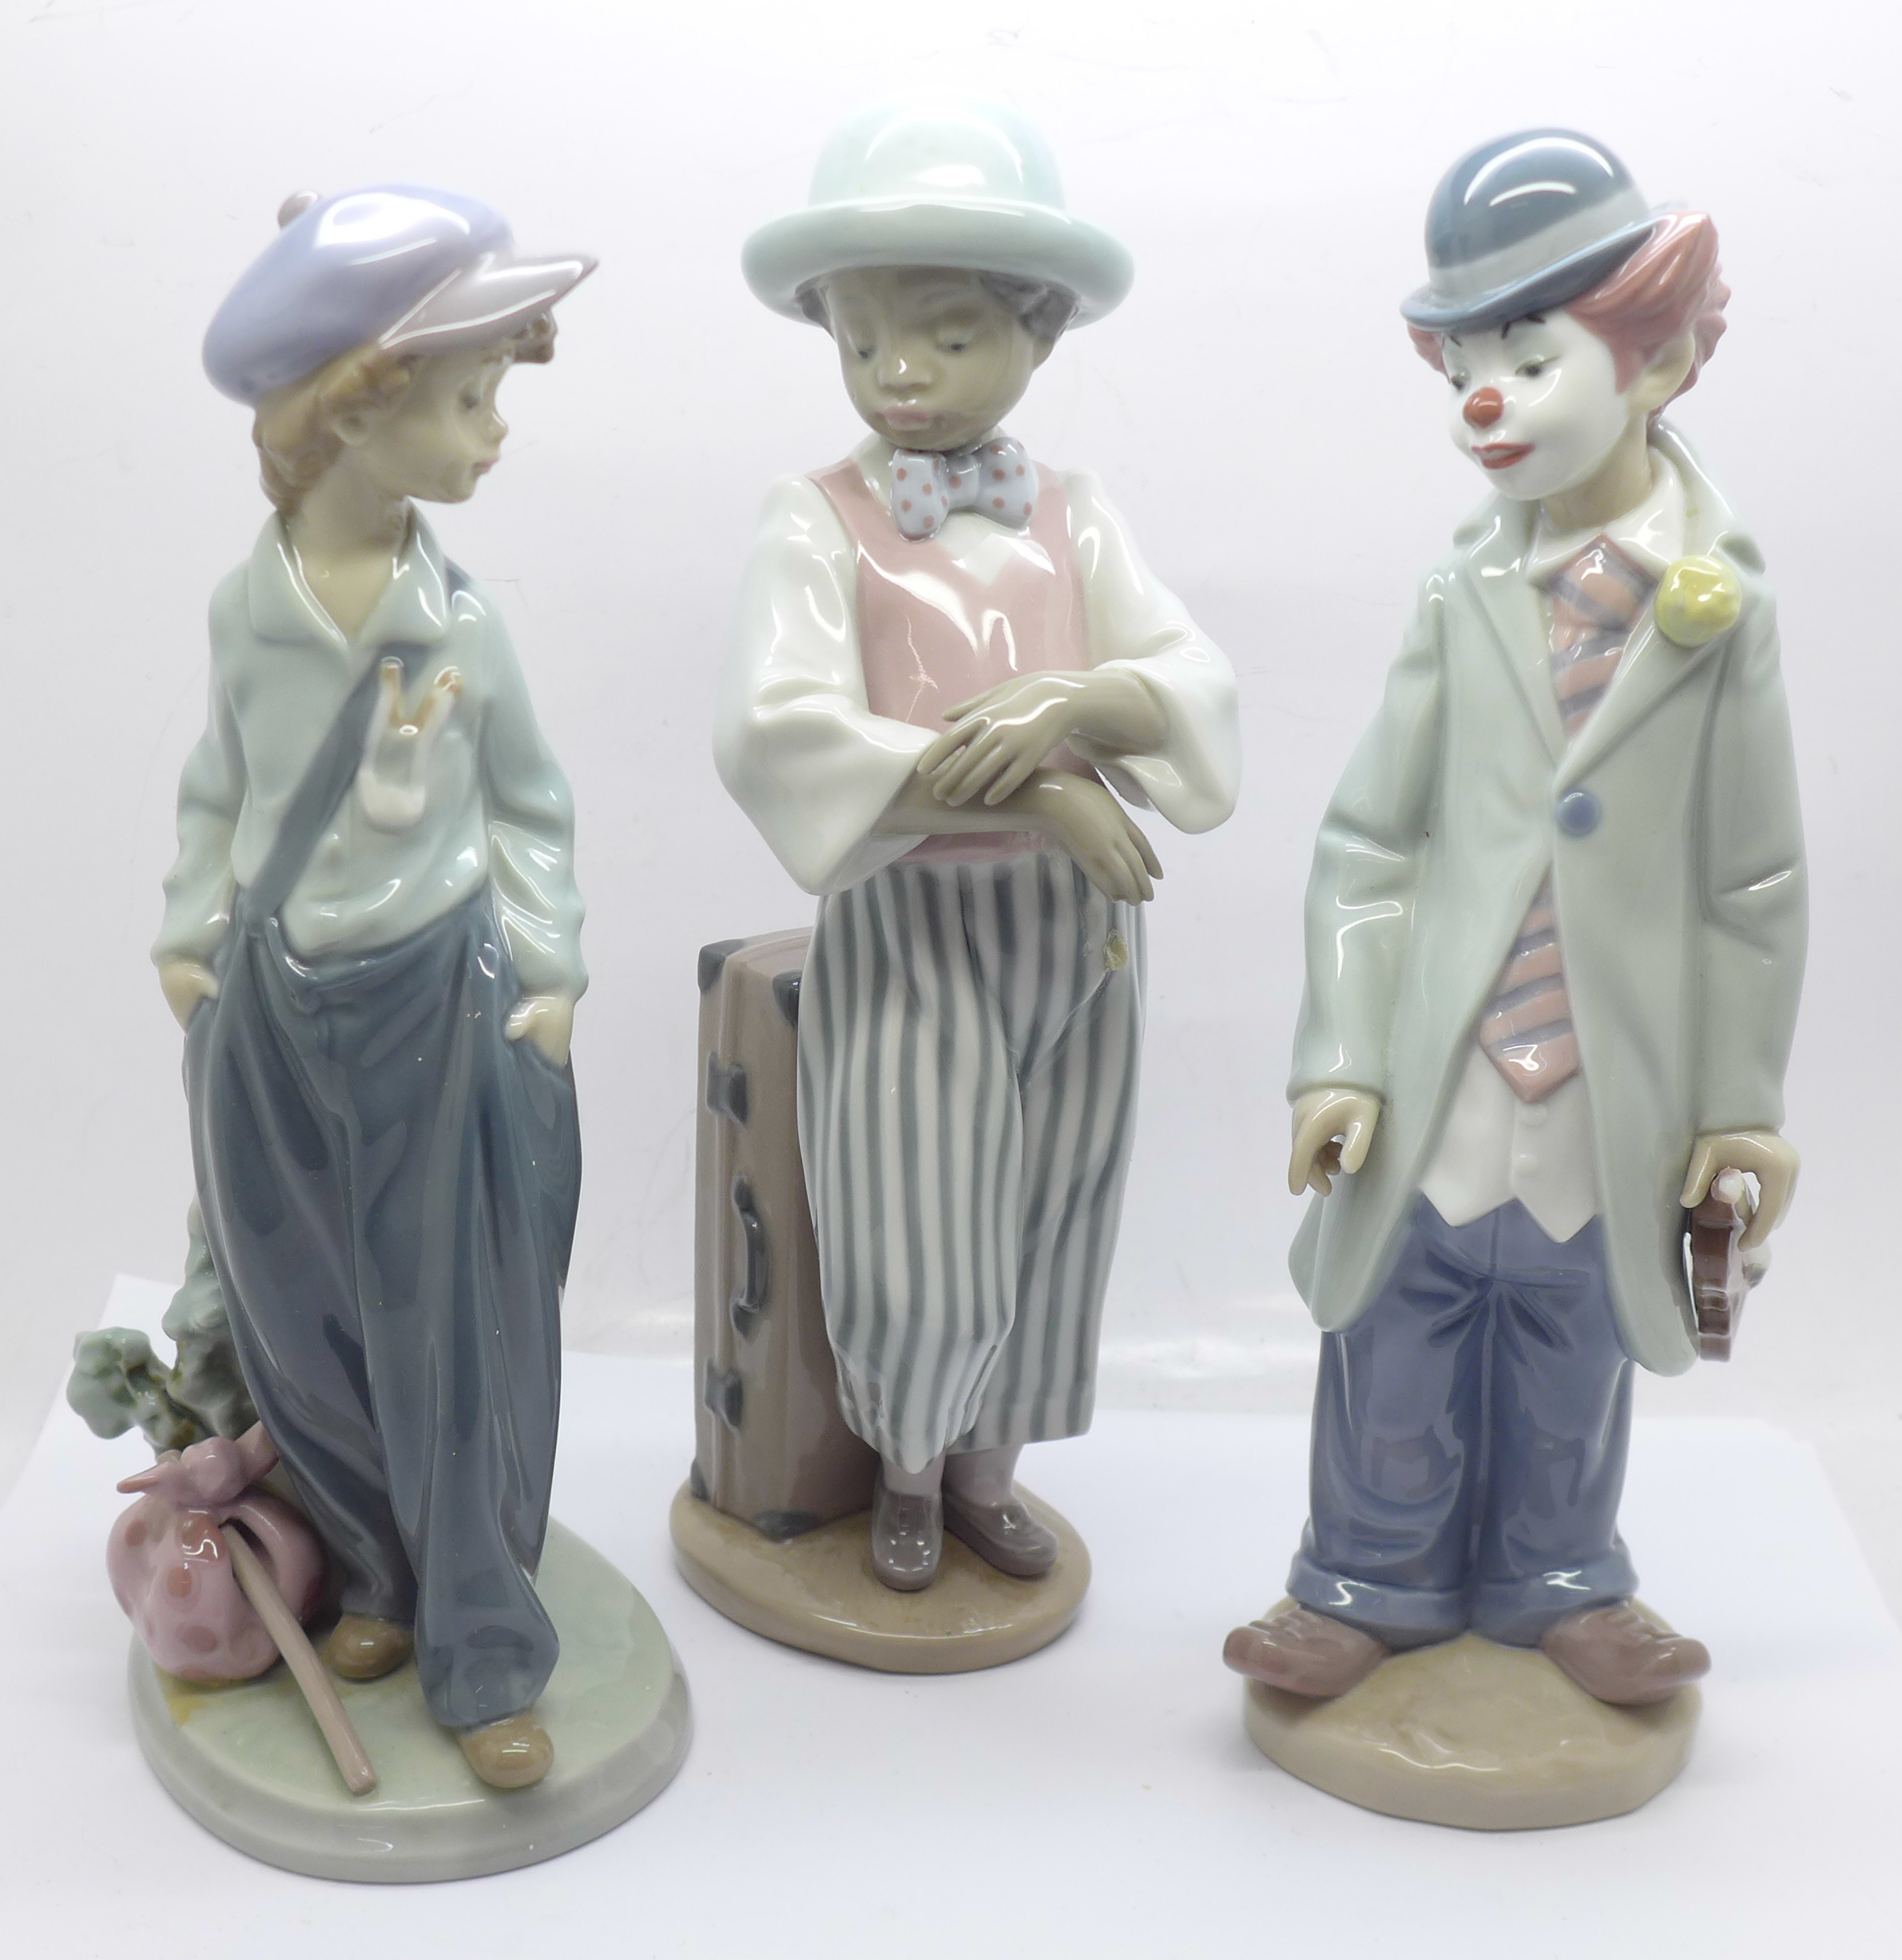 Three Lladro figures, The Wanderer, 22cm, model no. 5400, designer Antonio Ramos, issued 1987,